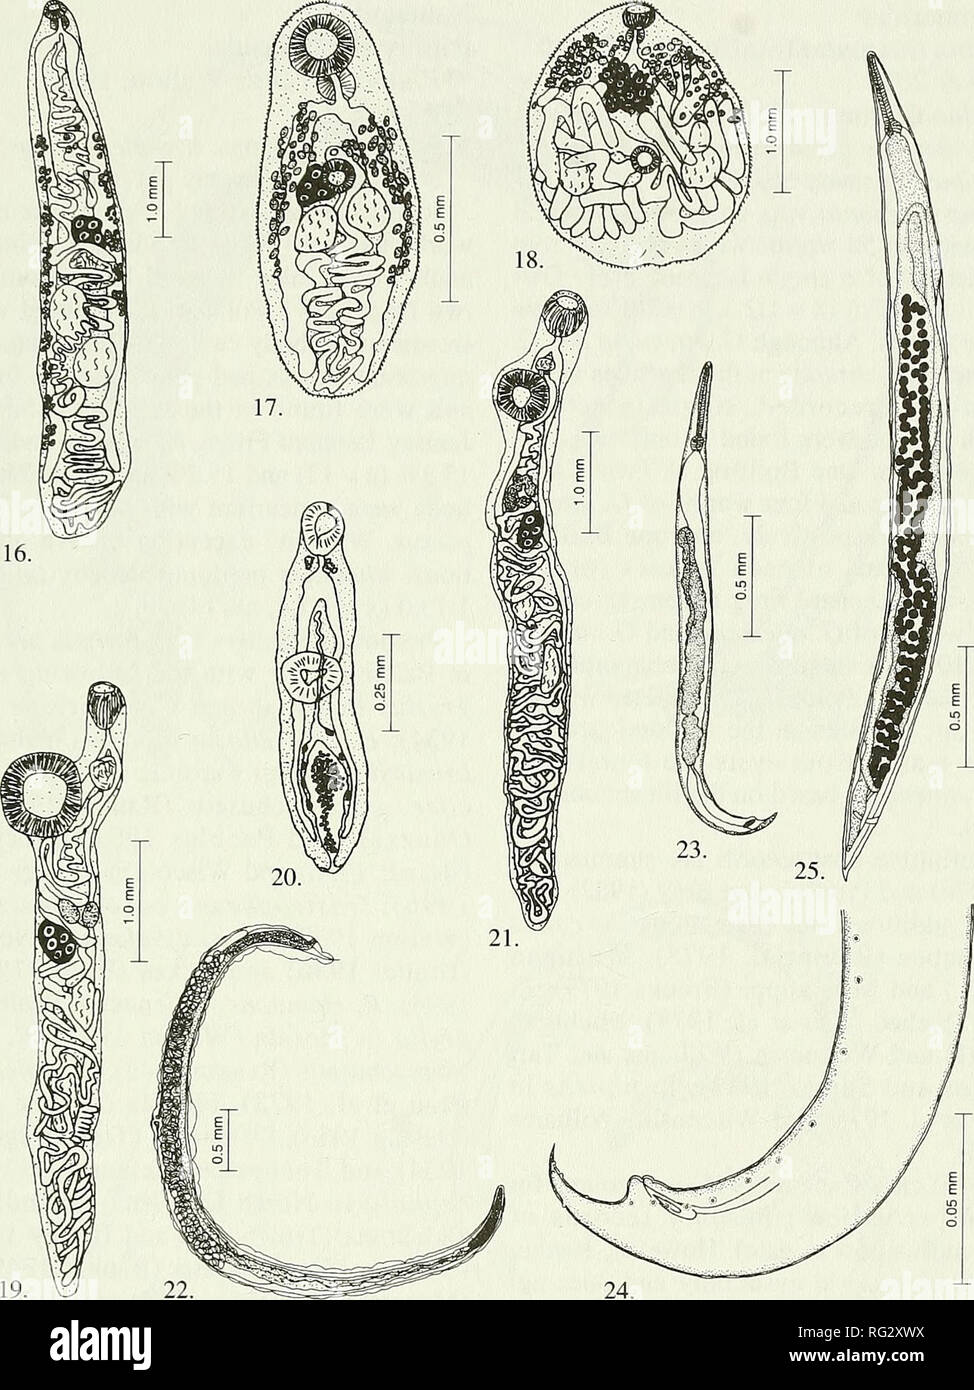 . The Canadian field-naturalist. 1998 McAlpine and Burt: Helminths of Frogs in New Brunswick 59. Figures 16-25. 16. Haematoloechus varioplexus, adult. 17. Glypthelmins quieta, adult. 18. Loxogenes arcanum, adult. 19. Gorgoderina attenuata, adult. 20. Gorgoderina atten- uata, excysted metacercaria. 21. Gorgoderina simplex, adult. 22. Rhabdias ranae, adult. 23. Cosmocercoides dukae, adult male. 24. Cosmocercoides dukae, adult male showing rosette papillae on caudal section. 25. Cosmocercoides dukae, adult female. Arkansas (McAllister et al. 1995b); R. pipiens in West Virginia (Brooks 1979) and W Stock Photo